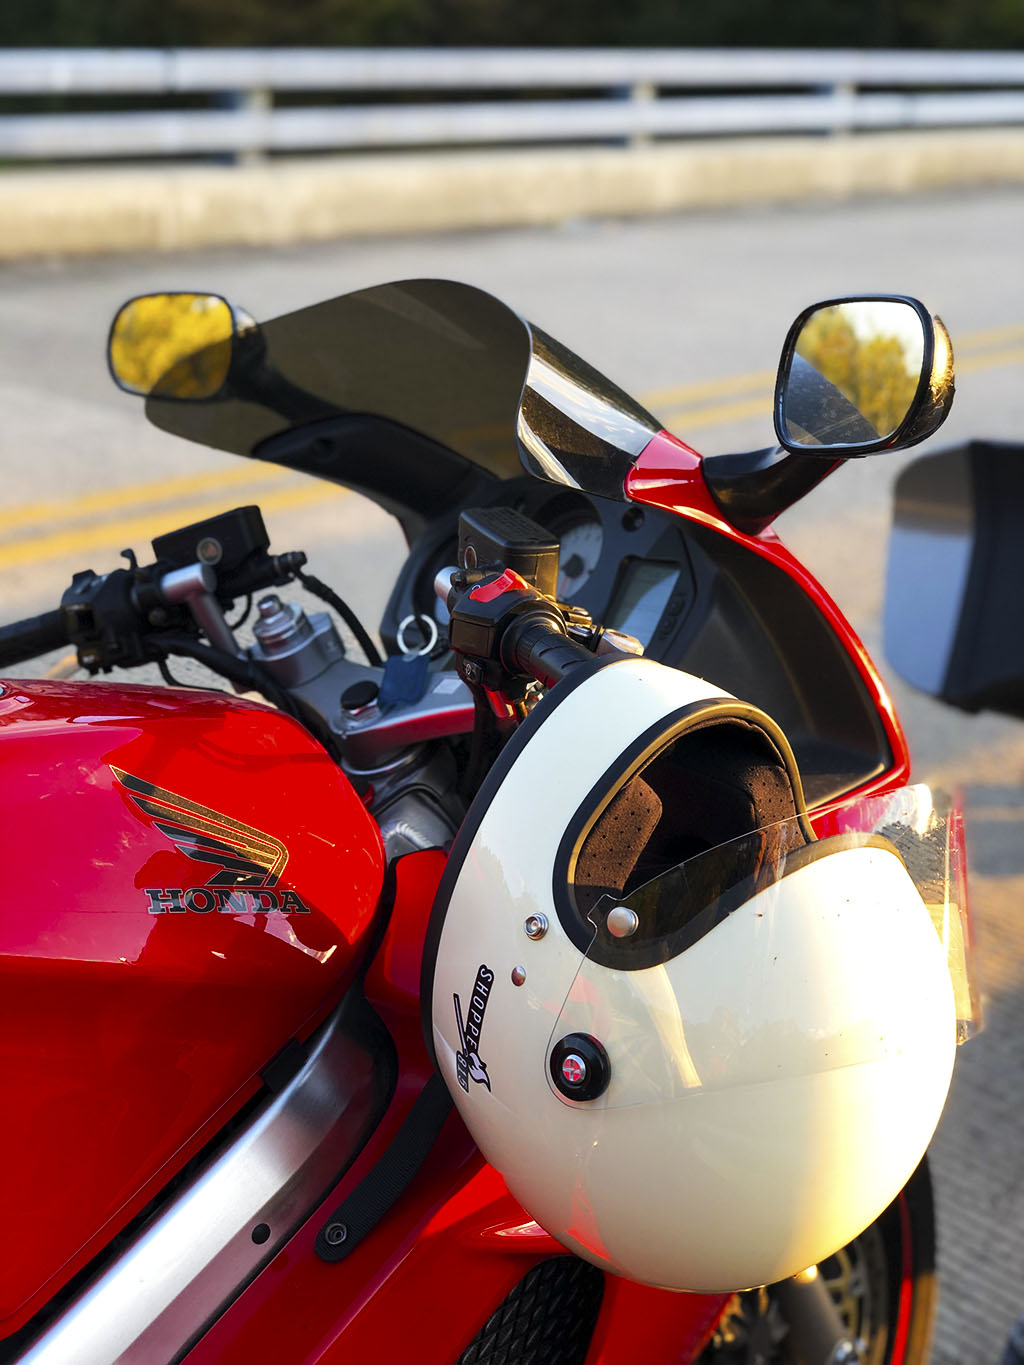 Katy's red Honda and white Biltwell helmet on the handles